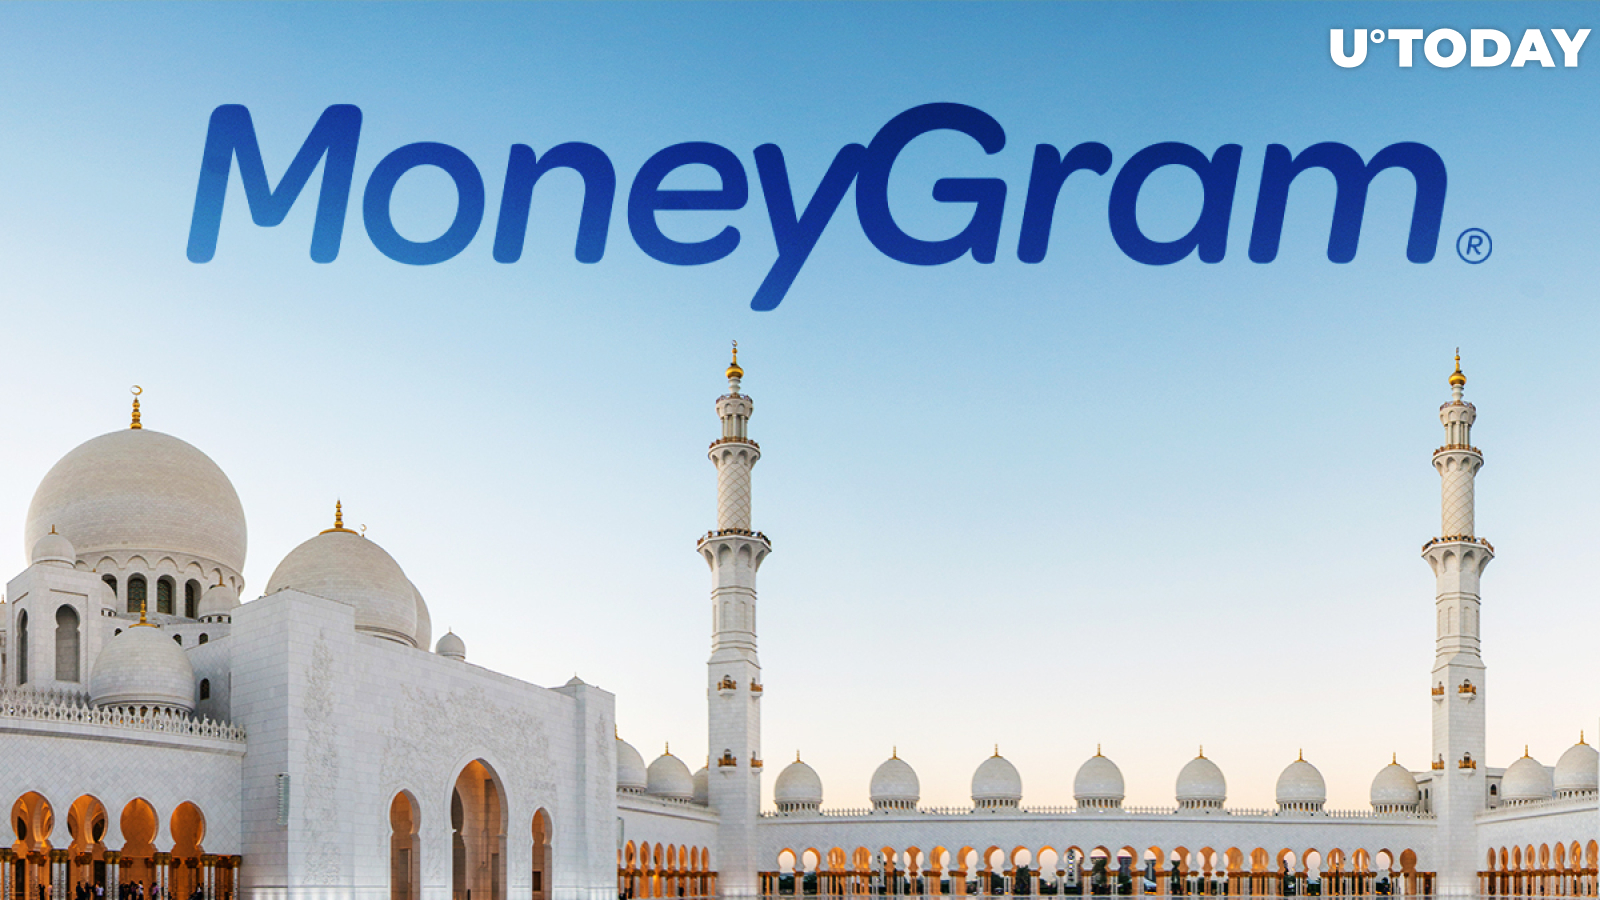 Ripple-Backed MoneyGram to Expand in UAE via eWallet Partnership